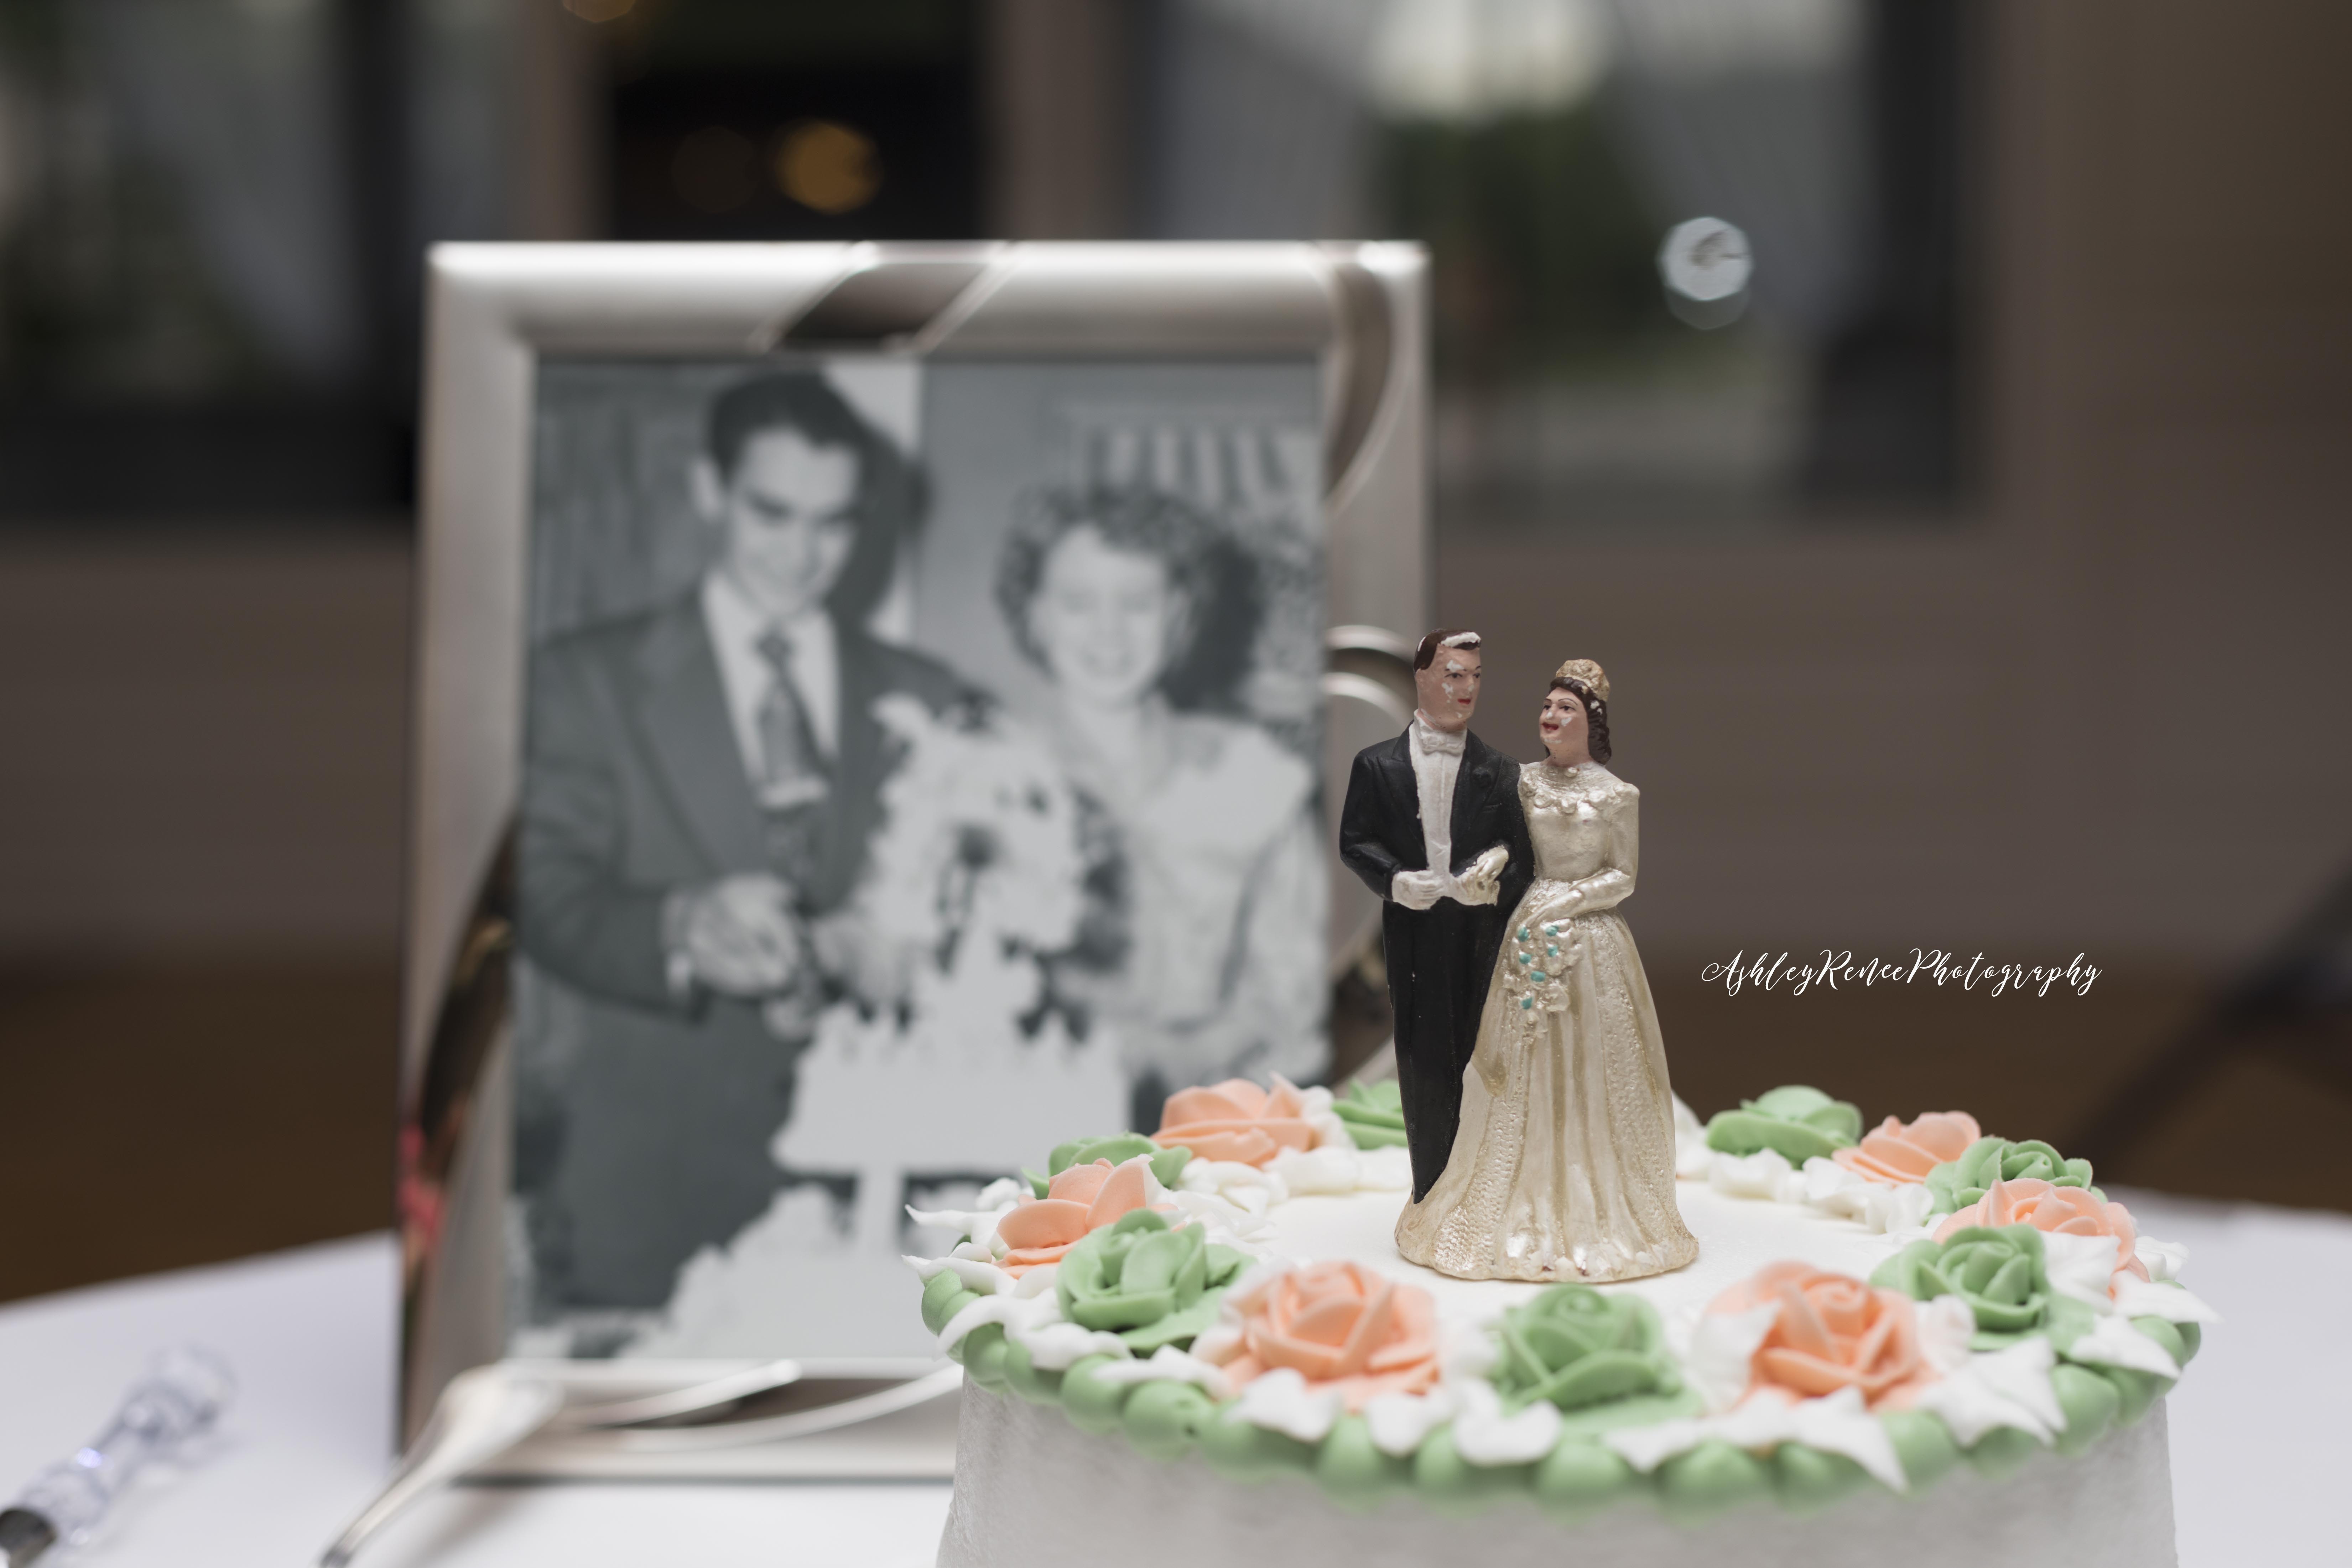 TheWillowsOnWestfieldweddingAshleyReneePhotography-weddingcake